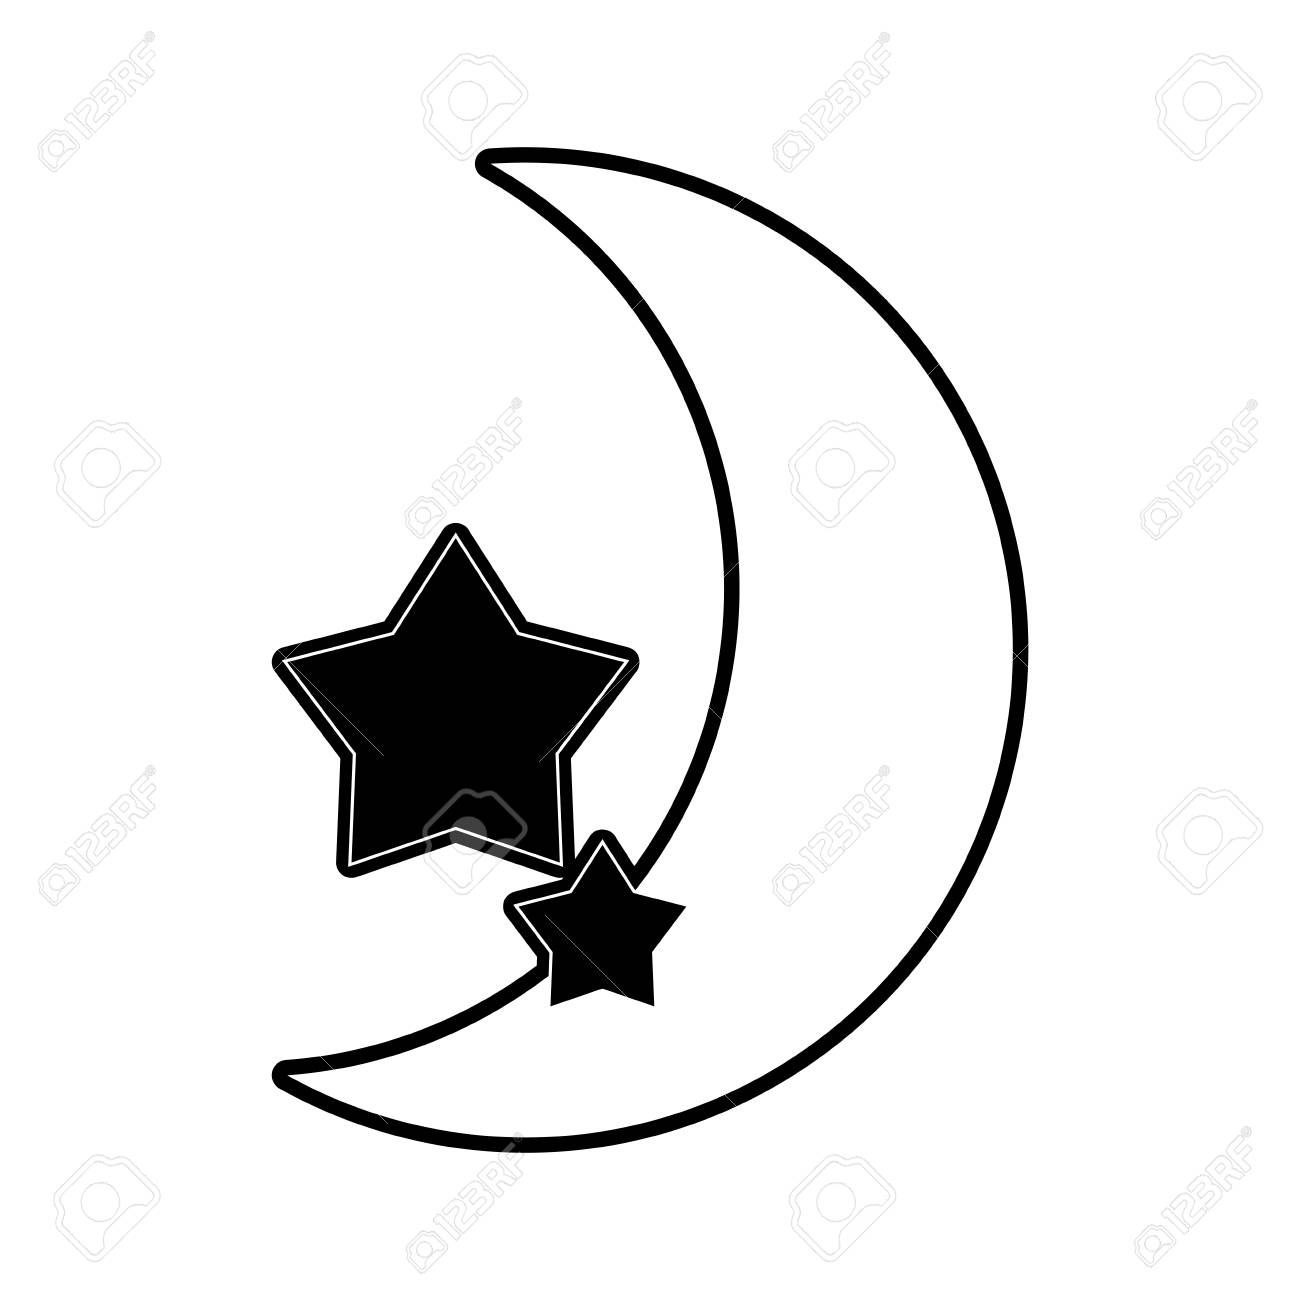 Crescent moon icon cartoon style Royalty Free Vector Image